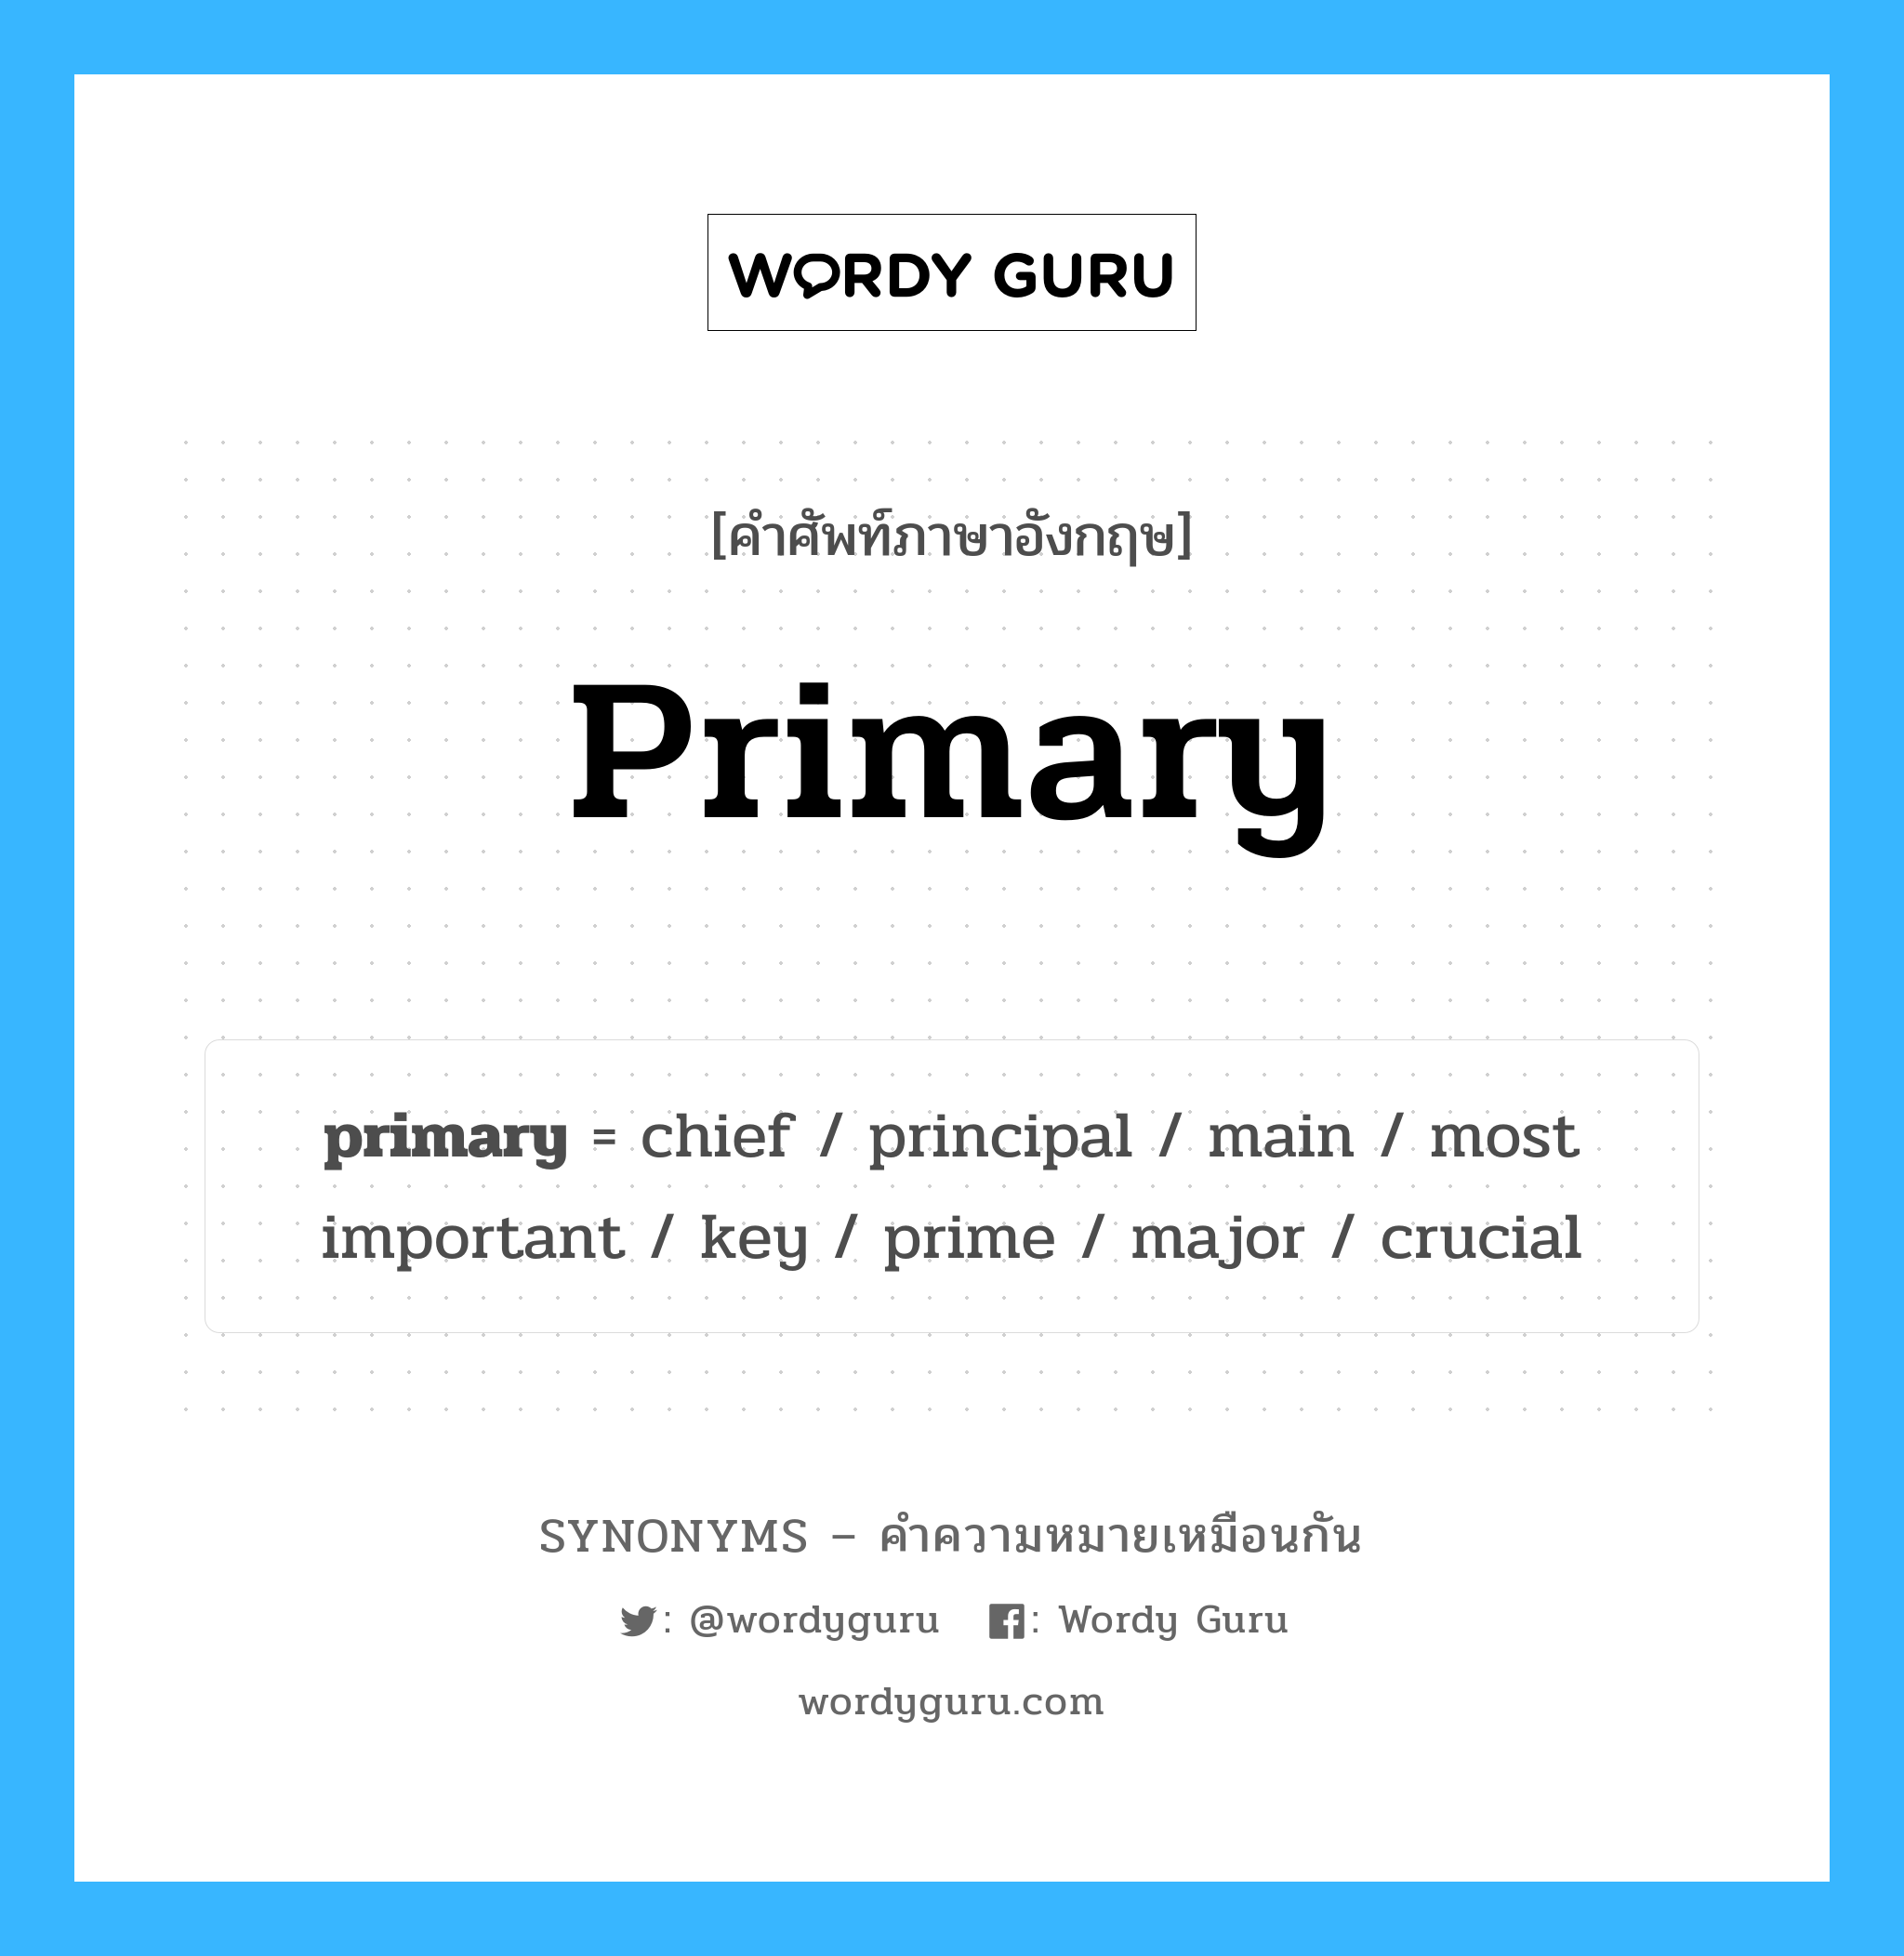 most important เป็นหนึ่งใน primary และมีคำอื่น ๆ อีกดังนี้, คำศัพท์ภาษาอังกฤษ most important ความหมายคล้ายกันกับ primary แปลว่า สำคัญที่สุด หมวด primary